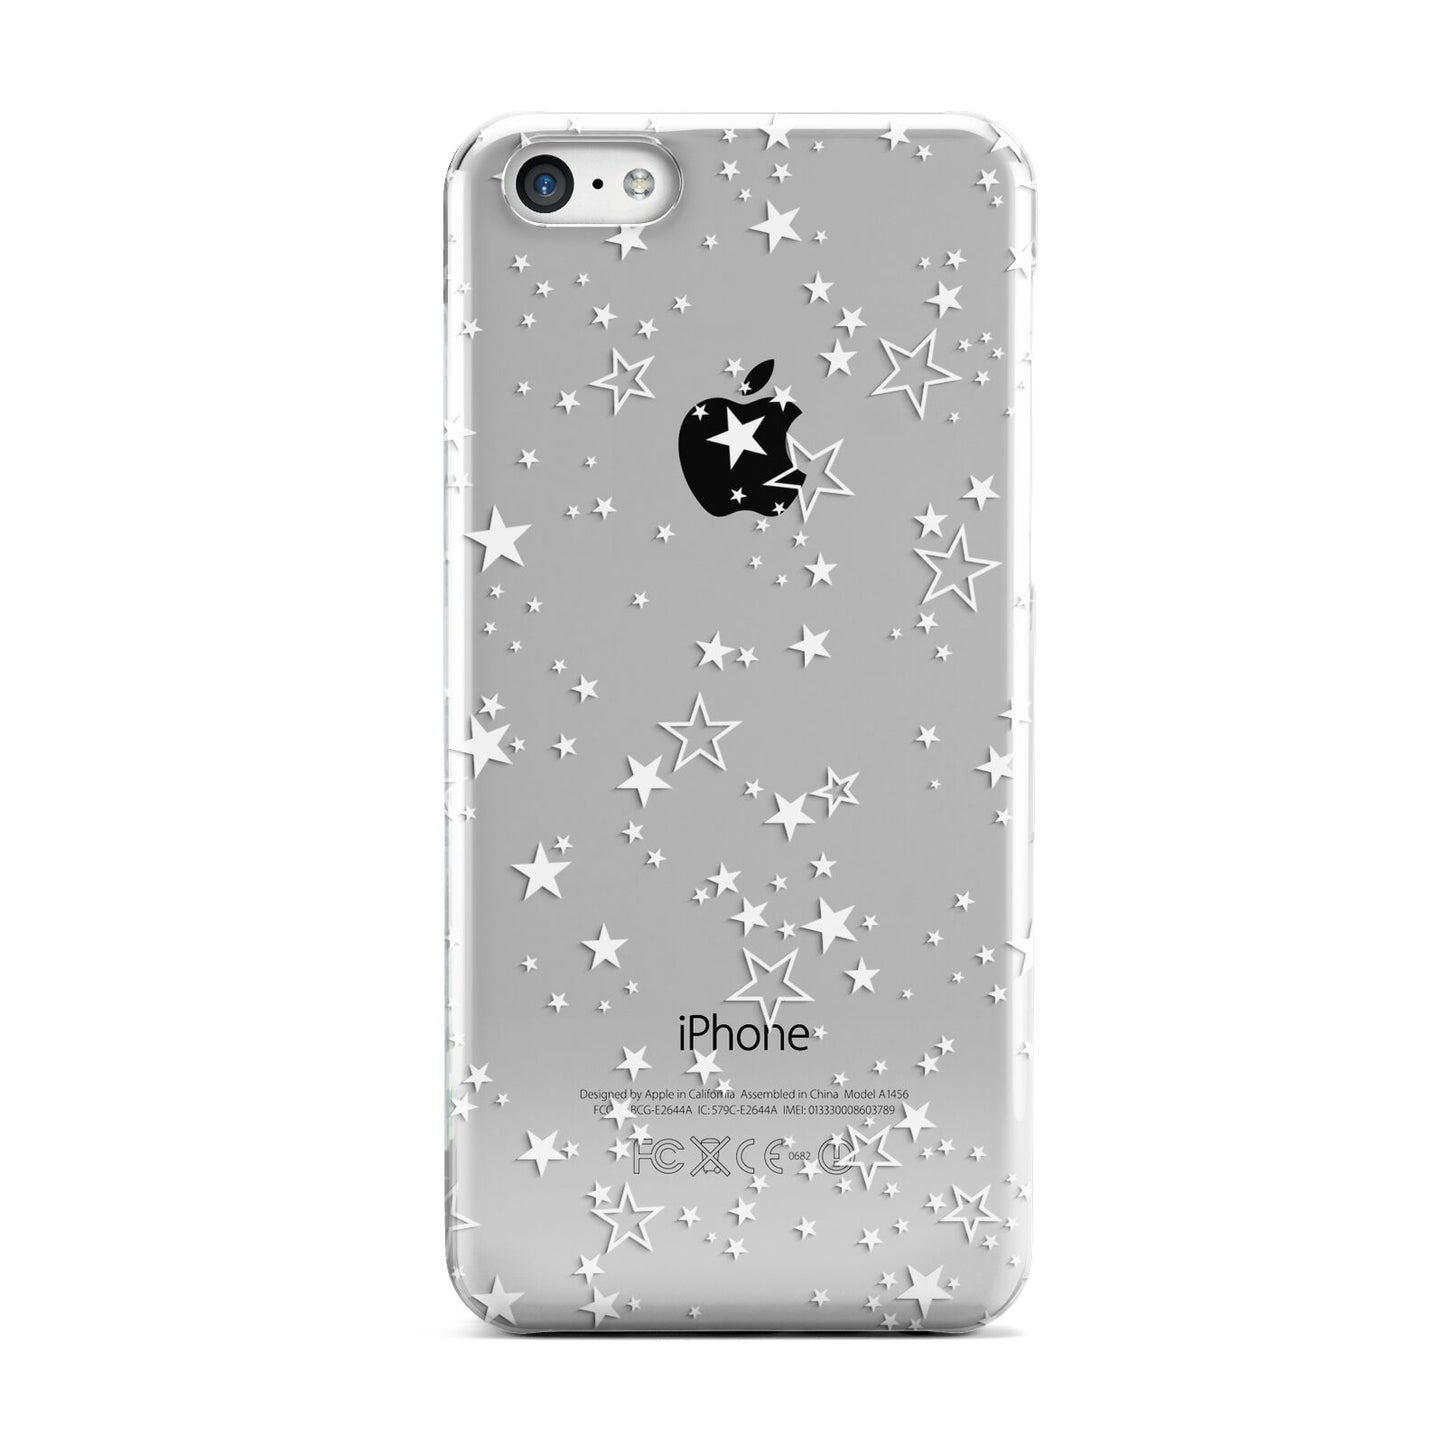 White Star Apple iPhone 5c Case